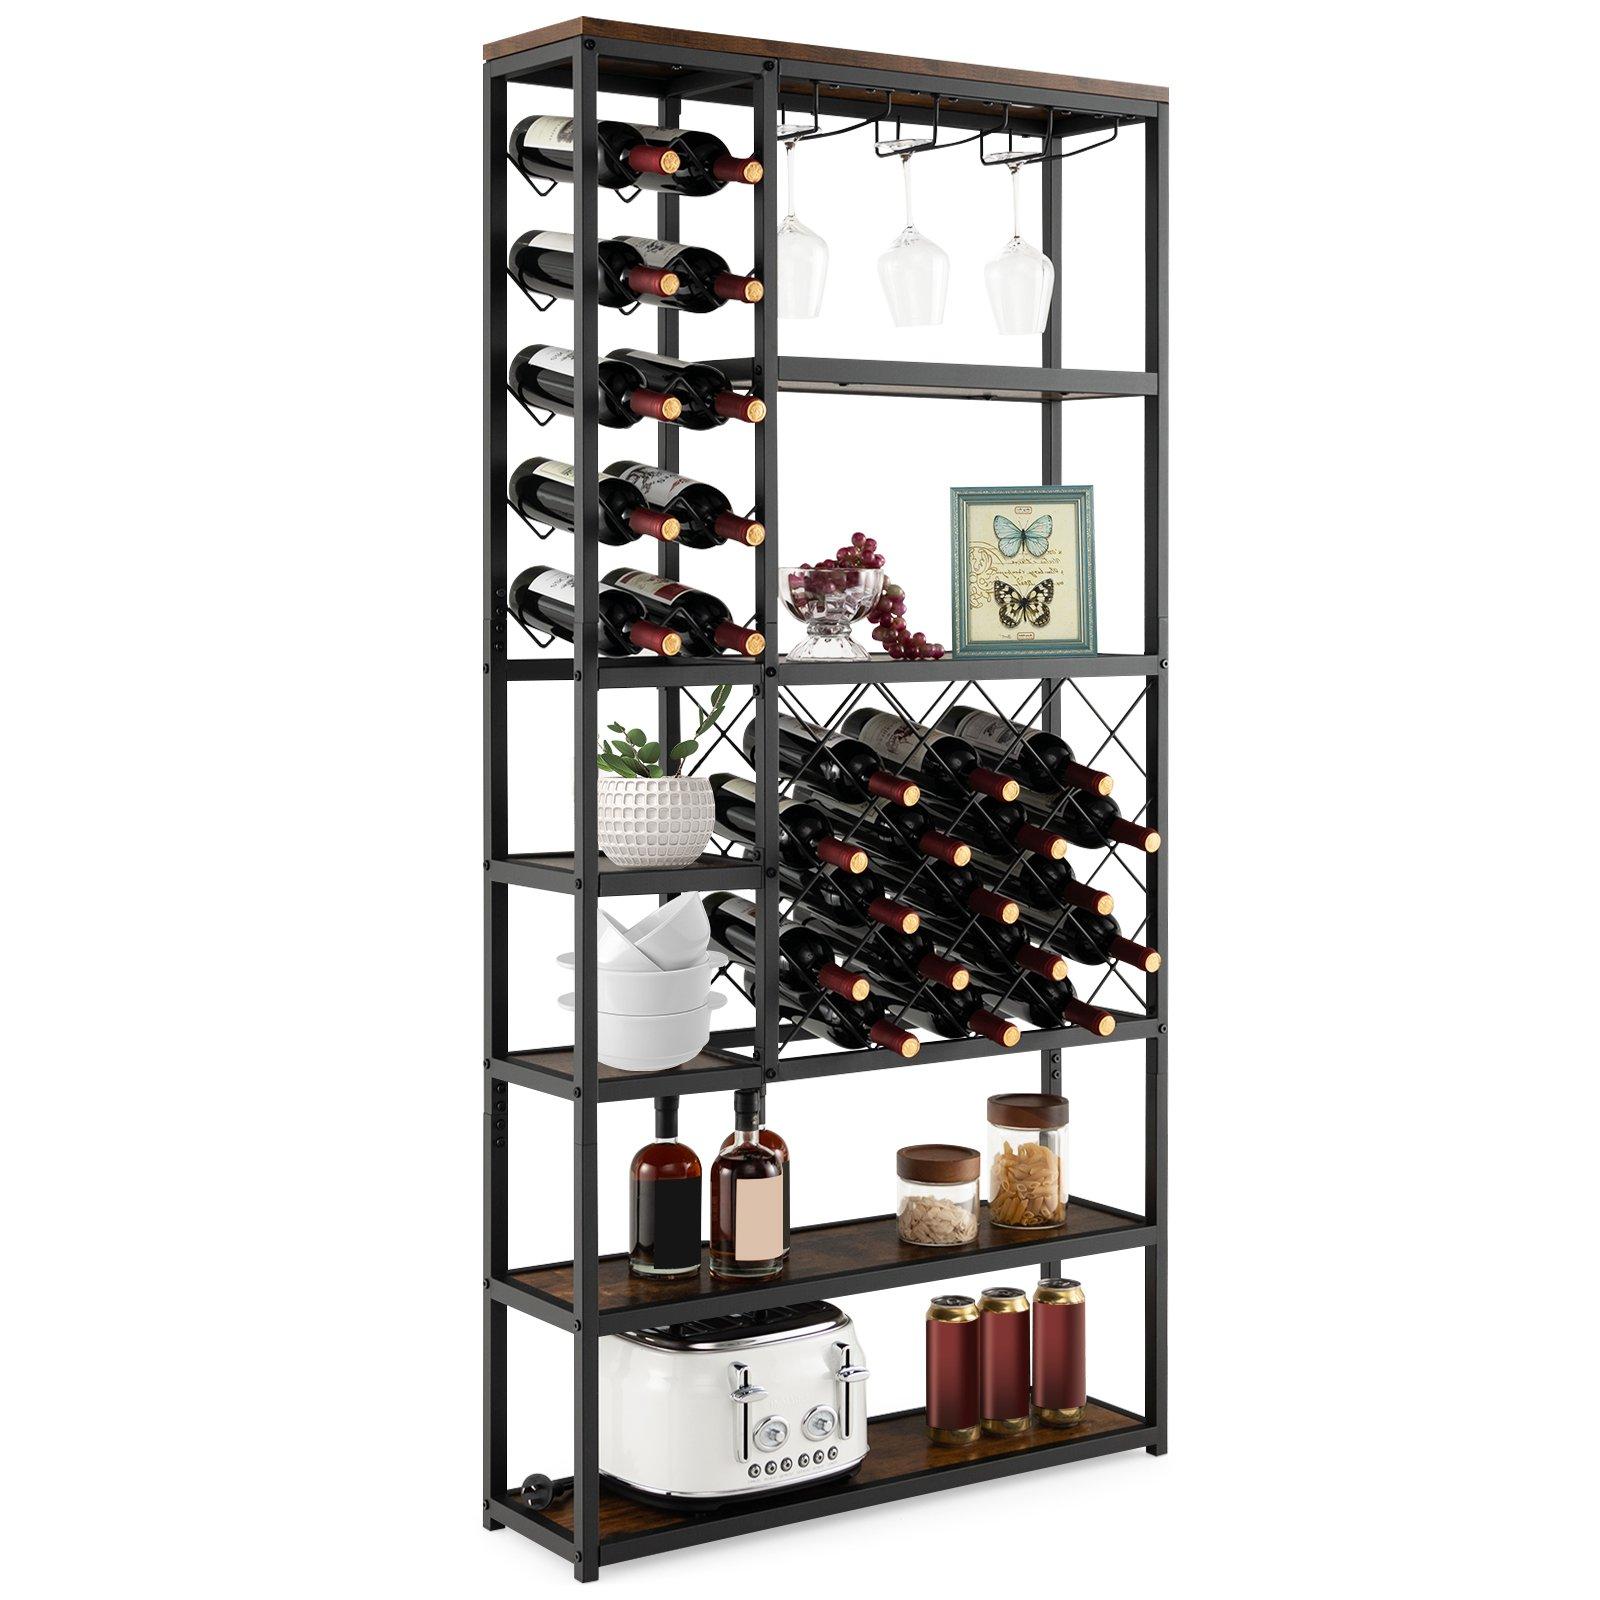 ndustrial Floor Wine Rack Freestanding Wine Display Shelf w/ Glass Holders